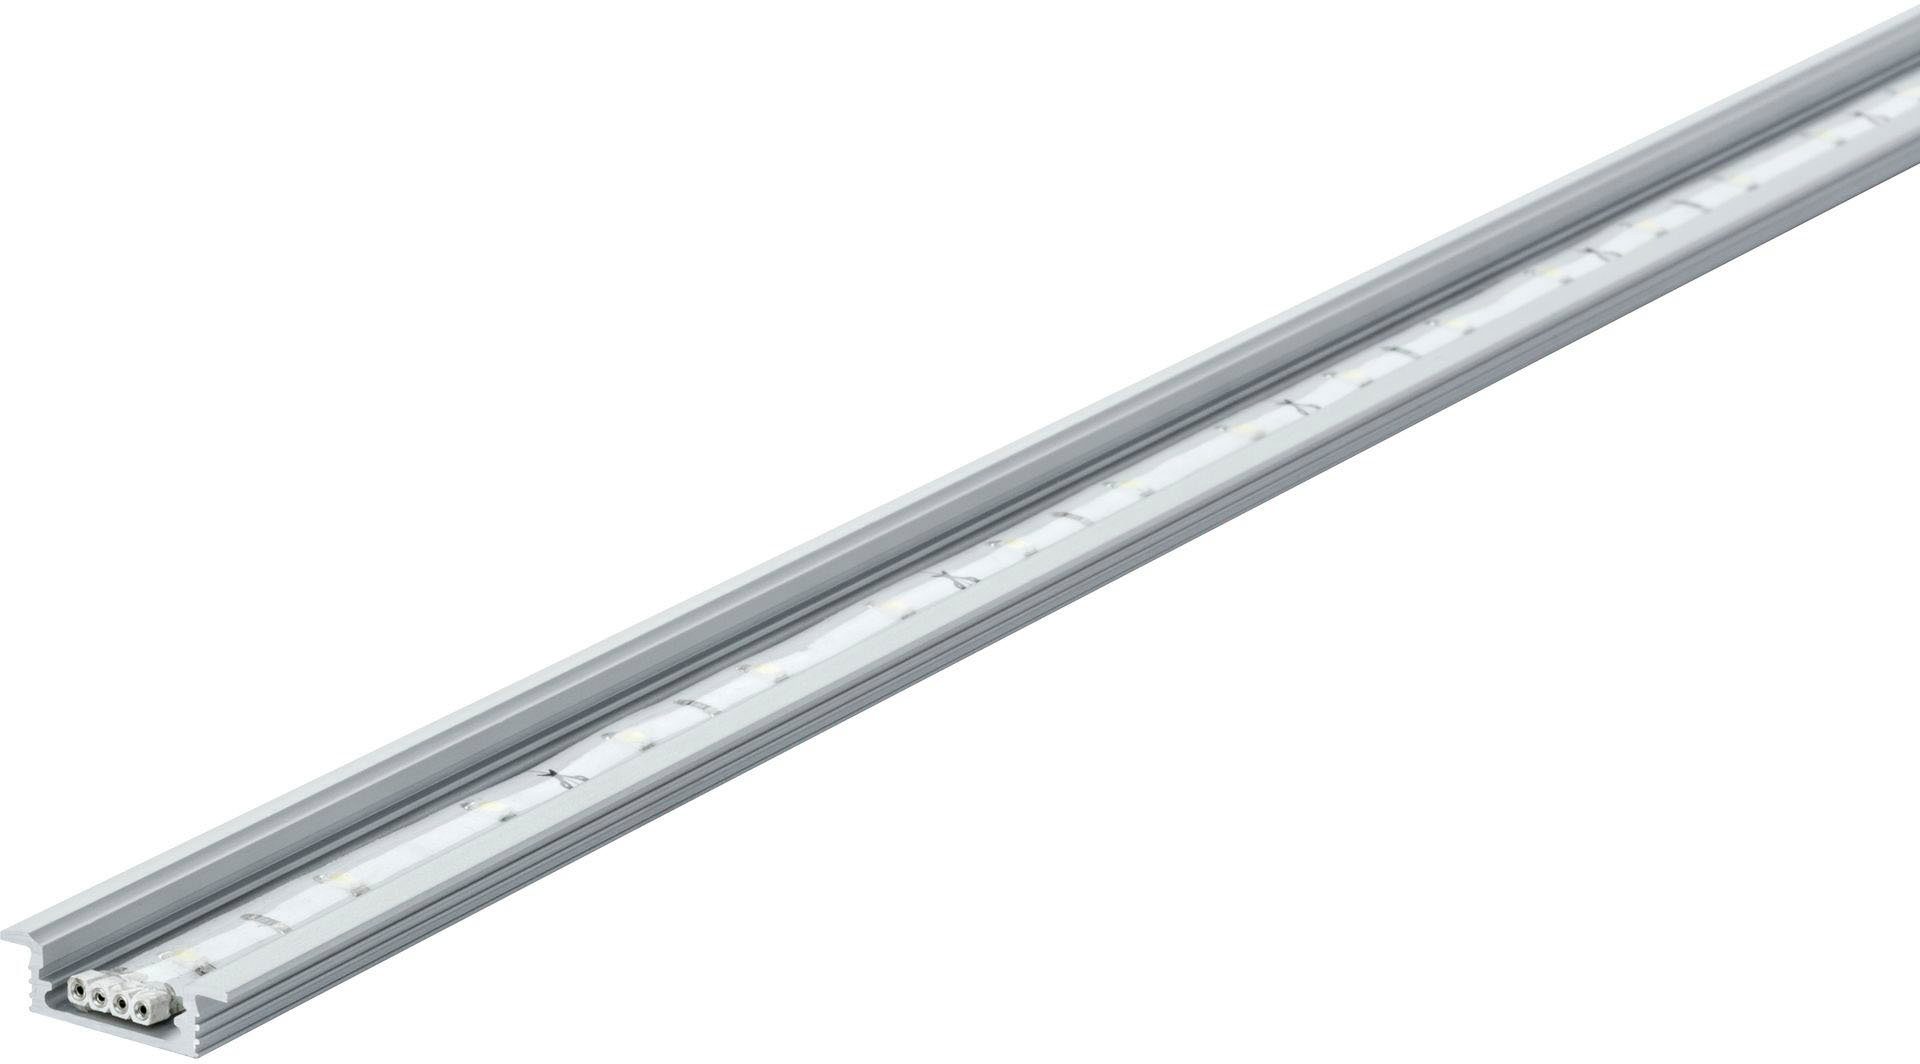 Paulmann Alu mit Diffusor Satin,Alu/Kunststoff 100cm eloxiert, Alu Floor Profil LED-Streifen